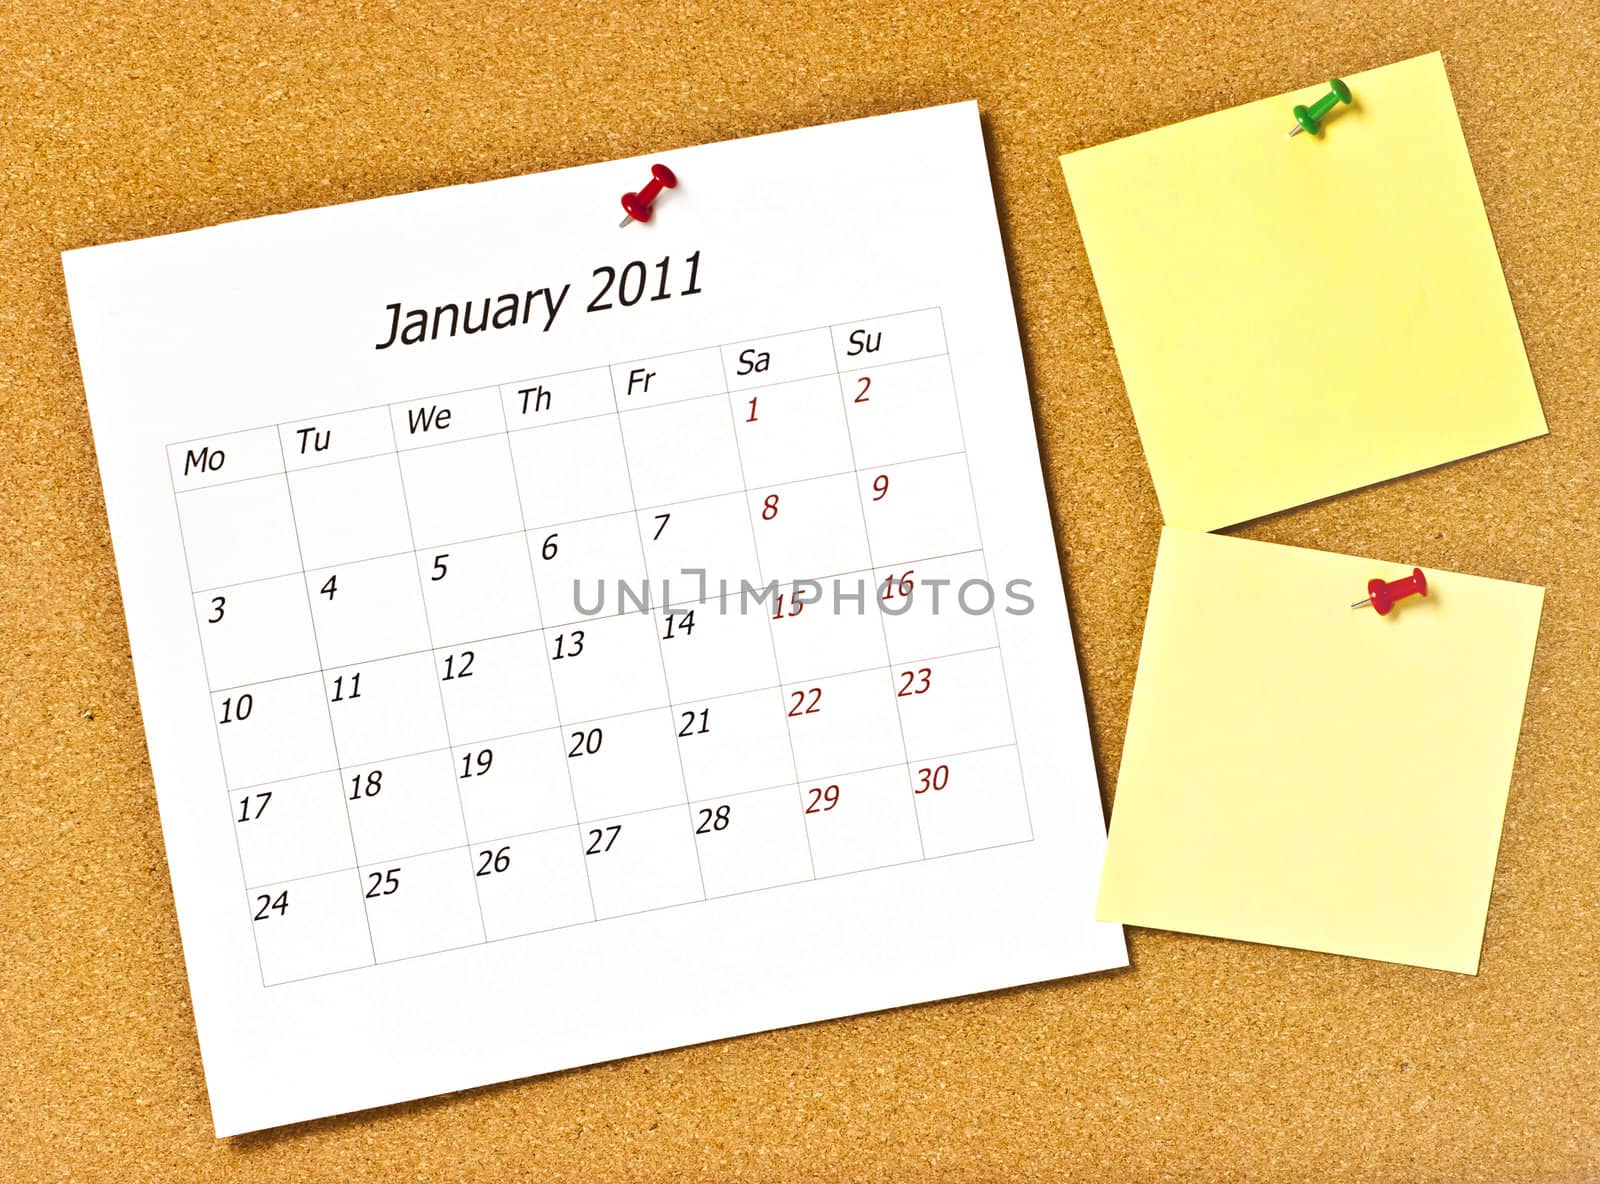 Calendar January. by gitusik